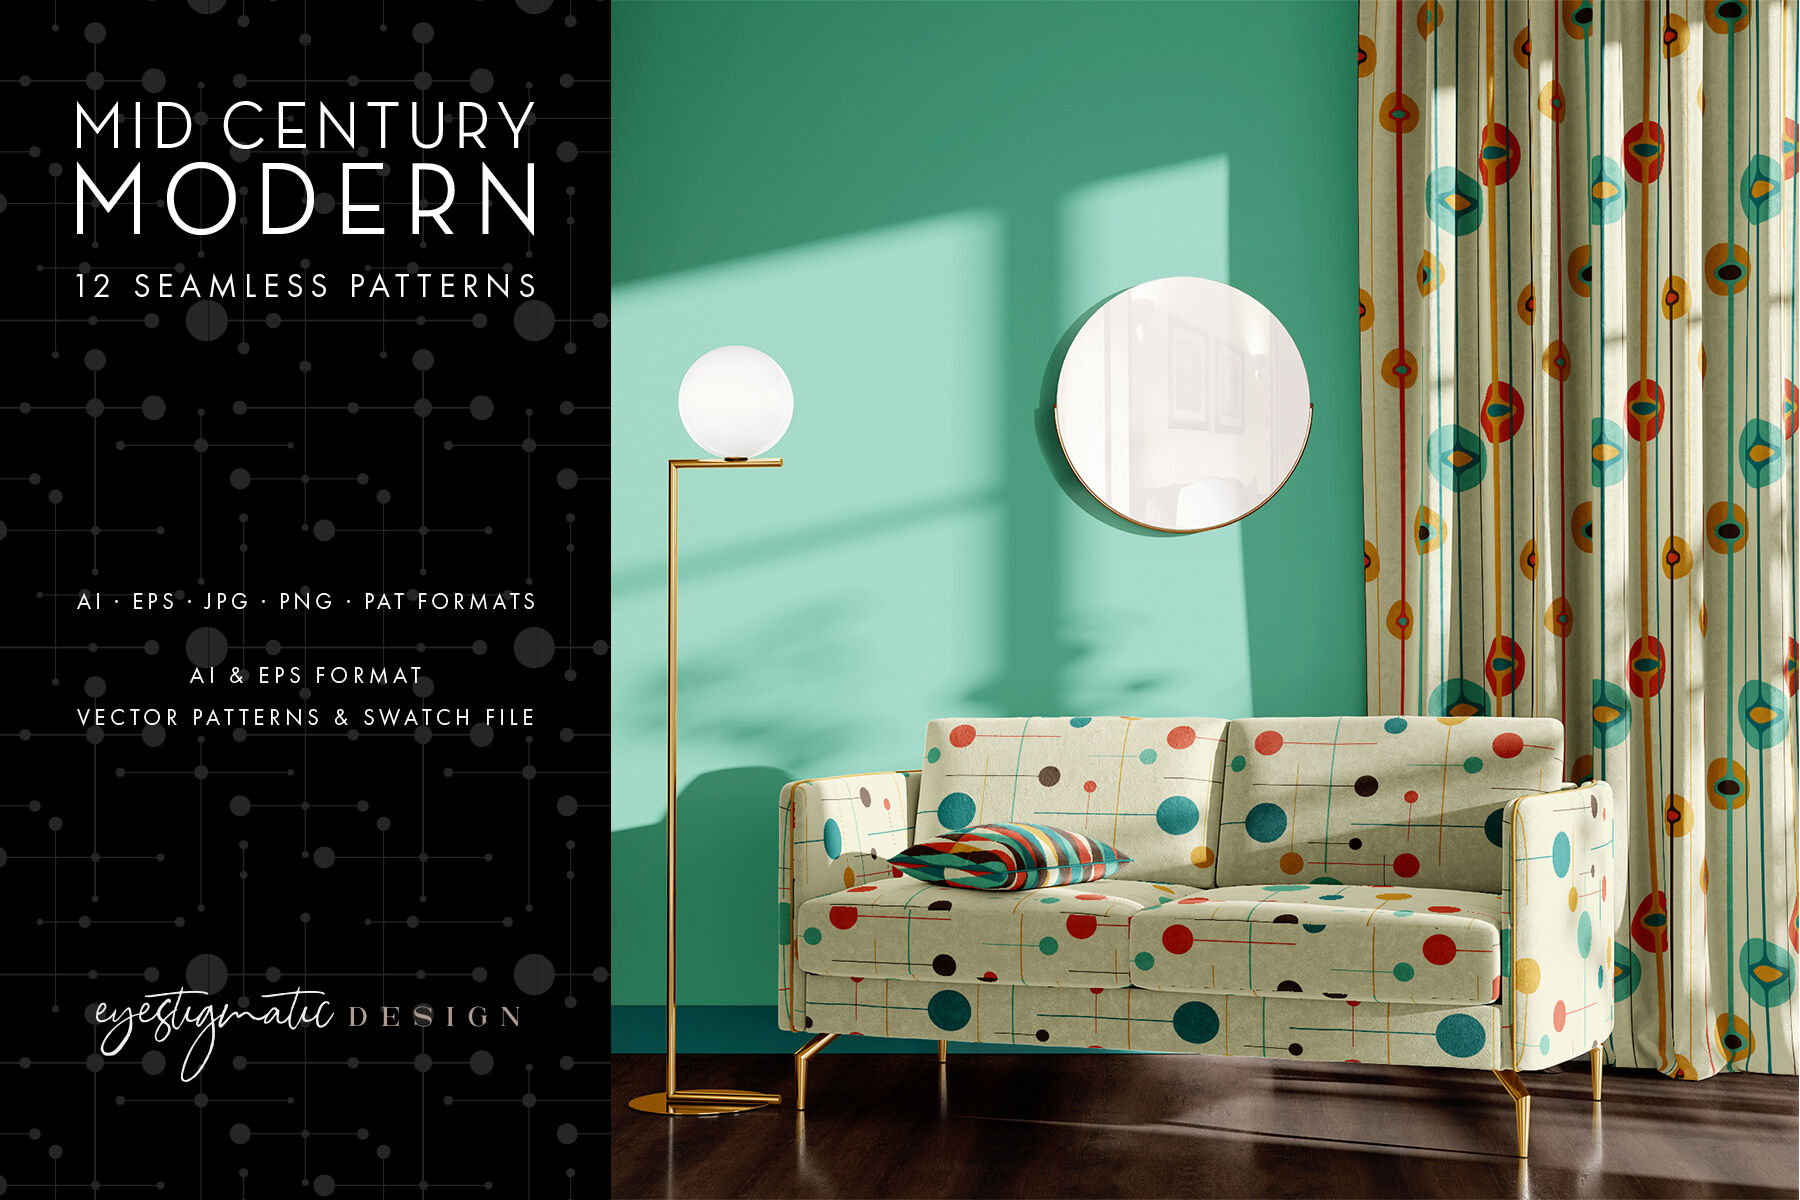 12 Seamless Mid Century Modern Patterns - Set 3 By Eyestigmatic Design